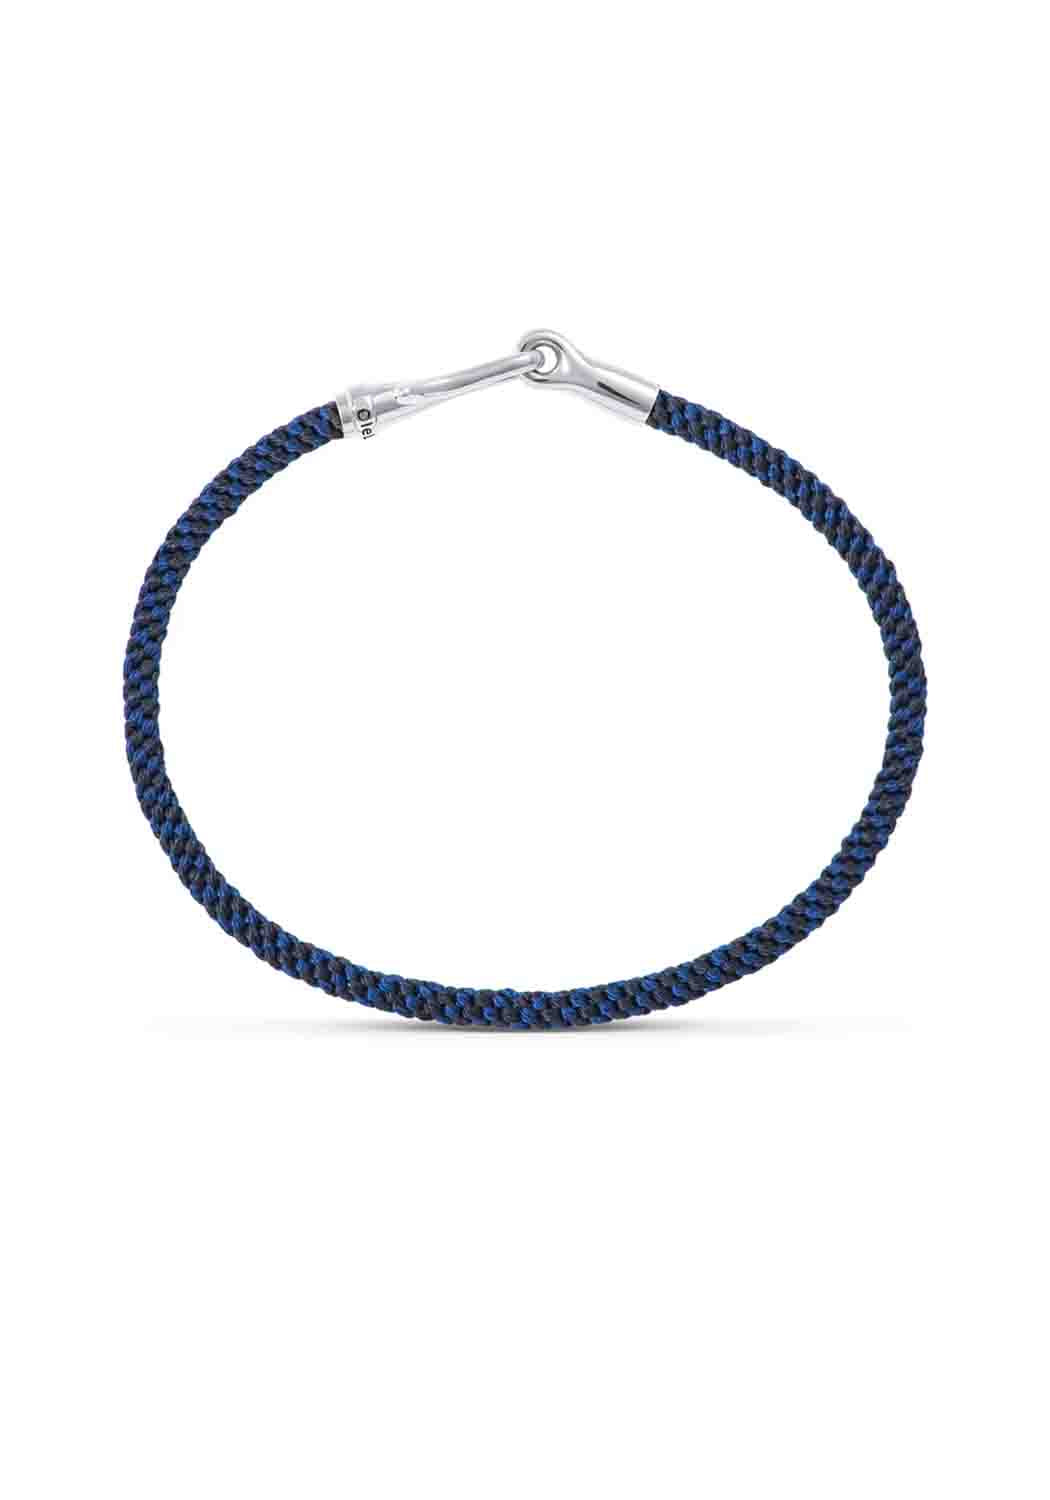 Ole Lynggaard Life 18KWG Midnight Blue Rope Bracelet | Ref. A3040-506 | OsterJewelers.com